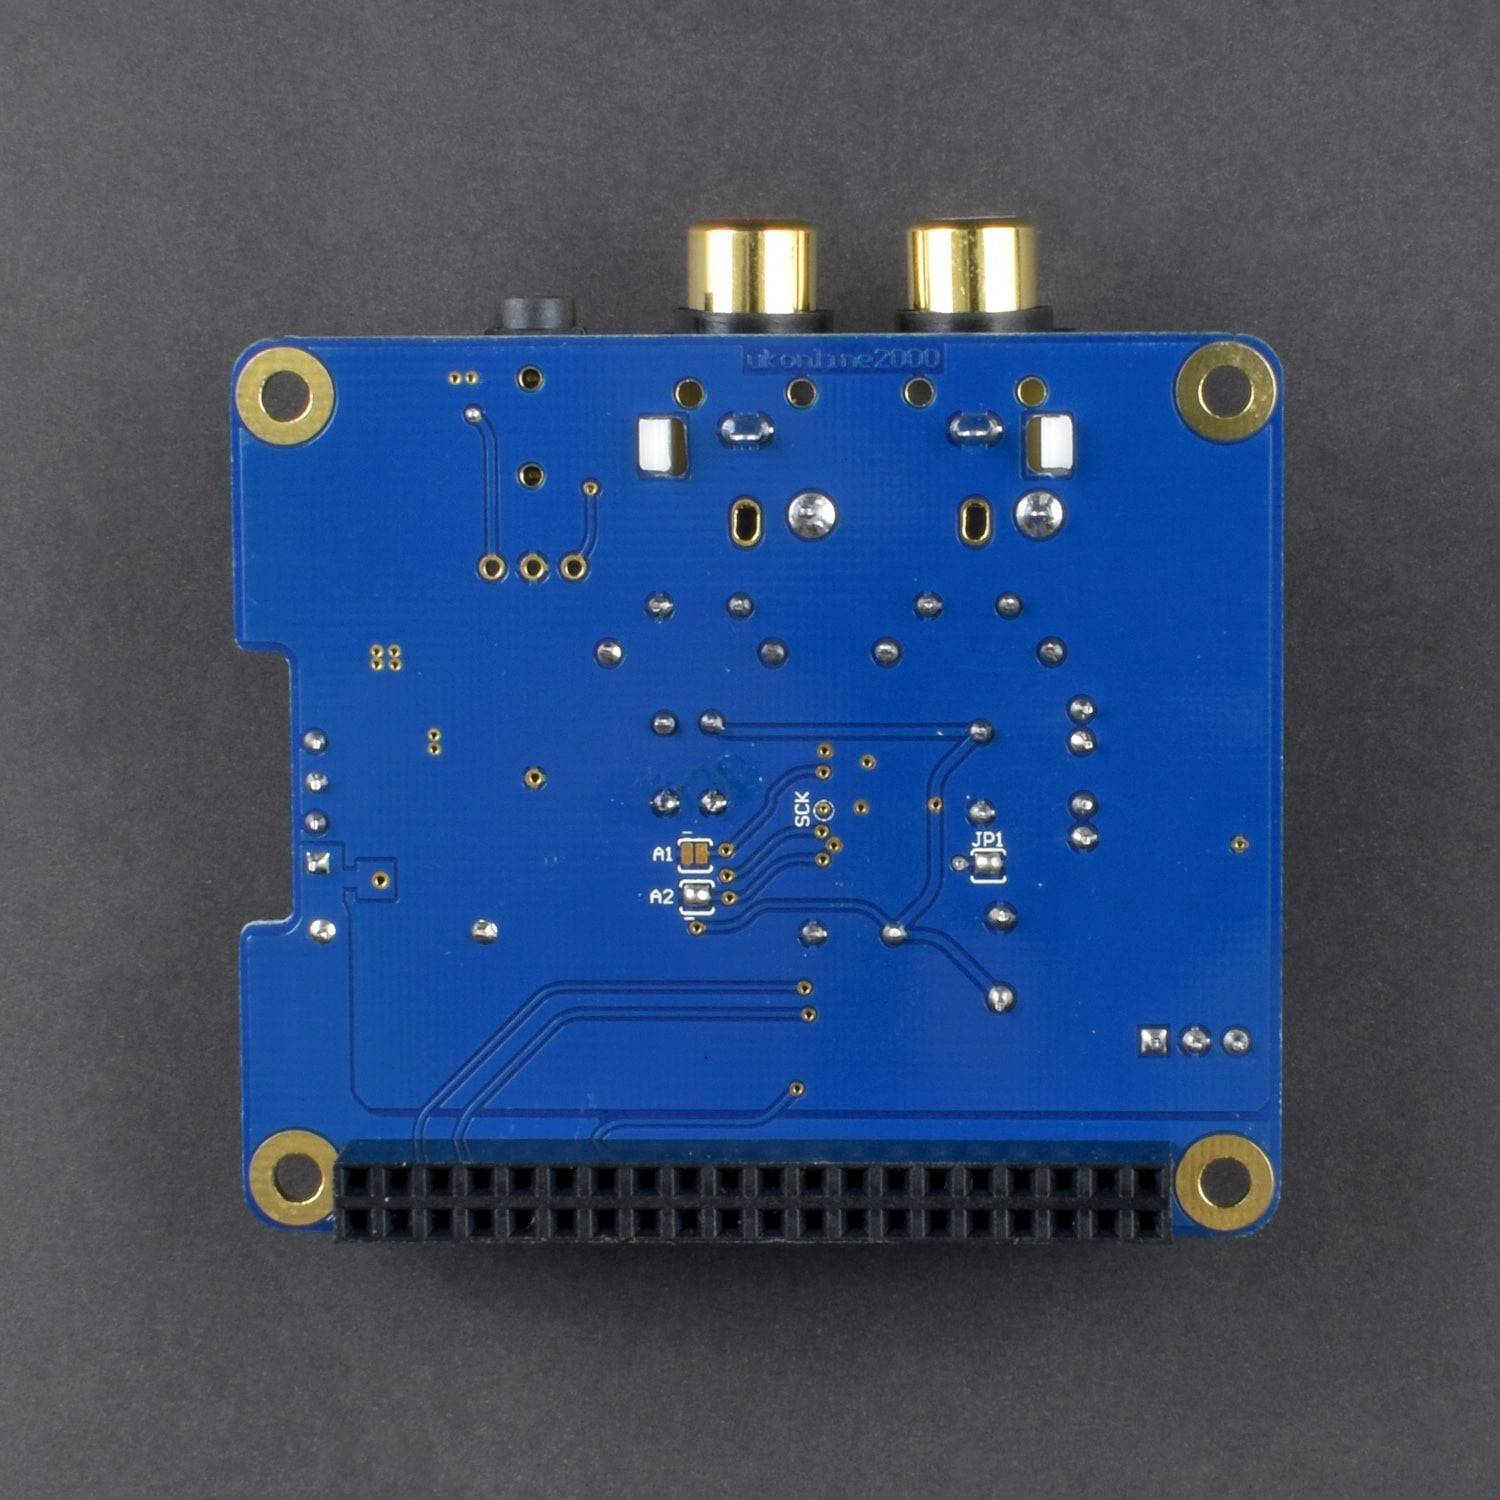 HIFI DAC + I2S port sound card for Raspberry Pi - KUBII